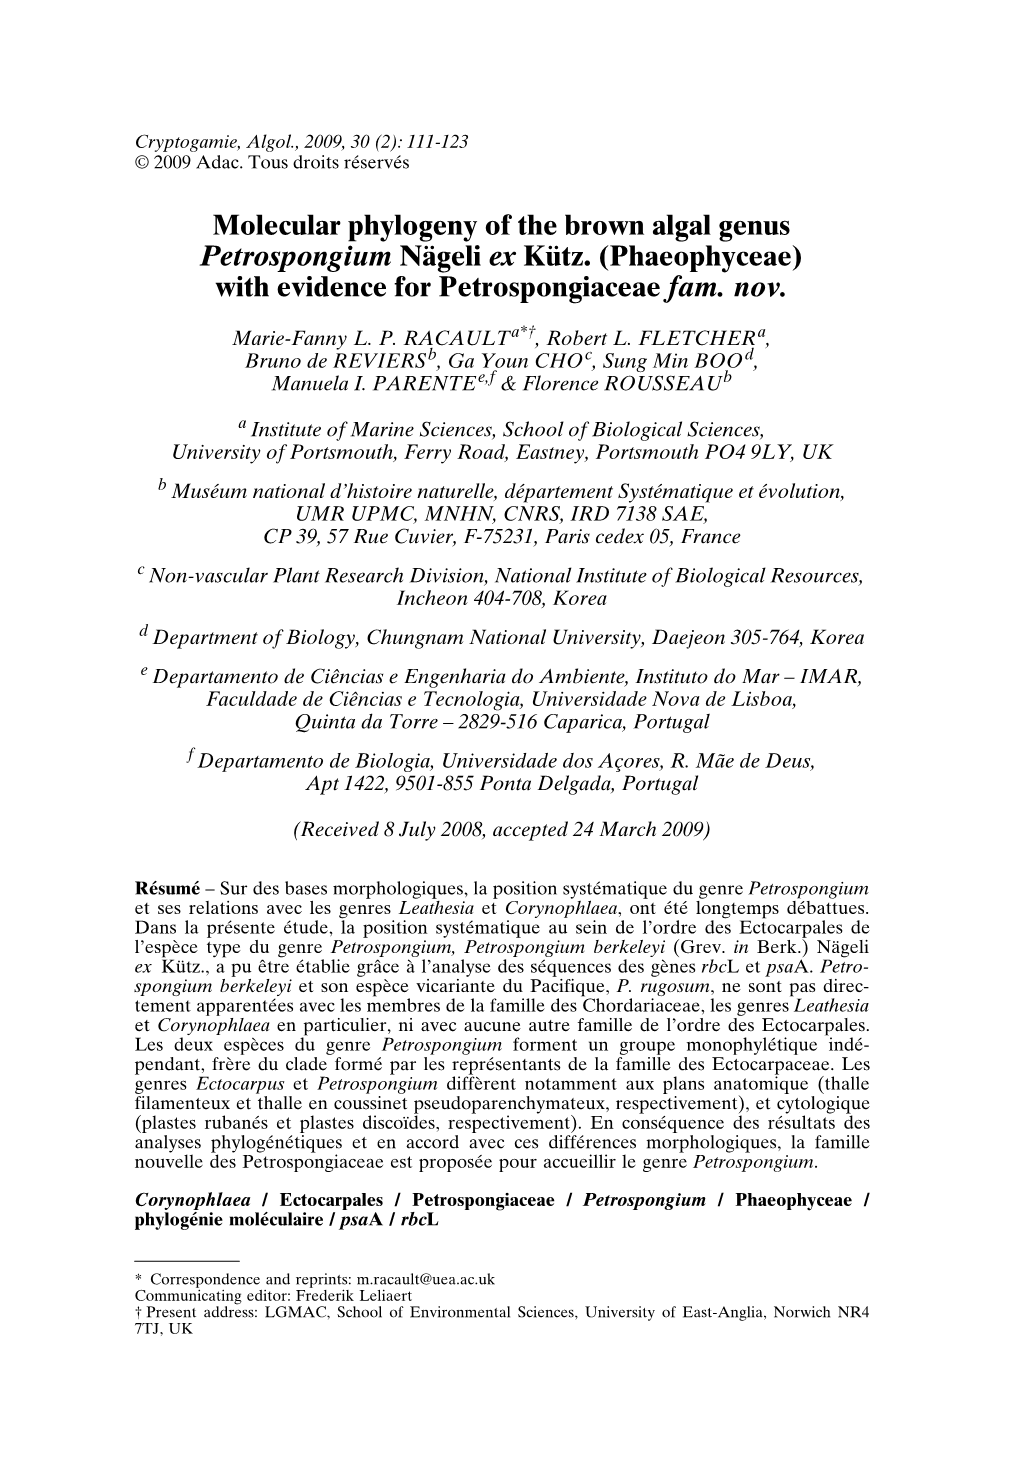 Molecular Phylogeny of the Brown Algal Genus Petrospongium Nägeli Ex Kütz.(Phaeophyceae) with Evidence for Petrospongiaceae Fam